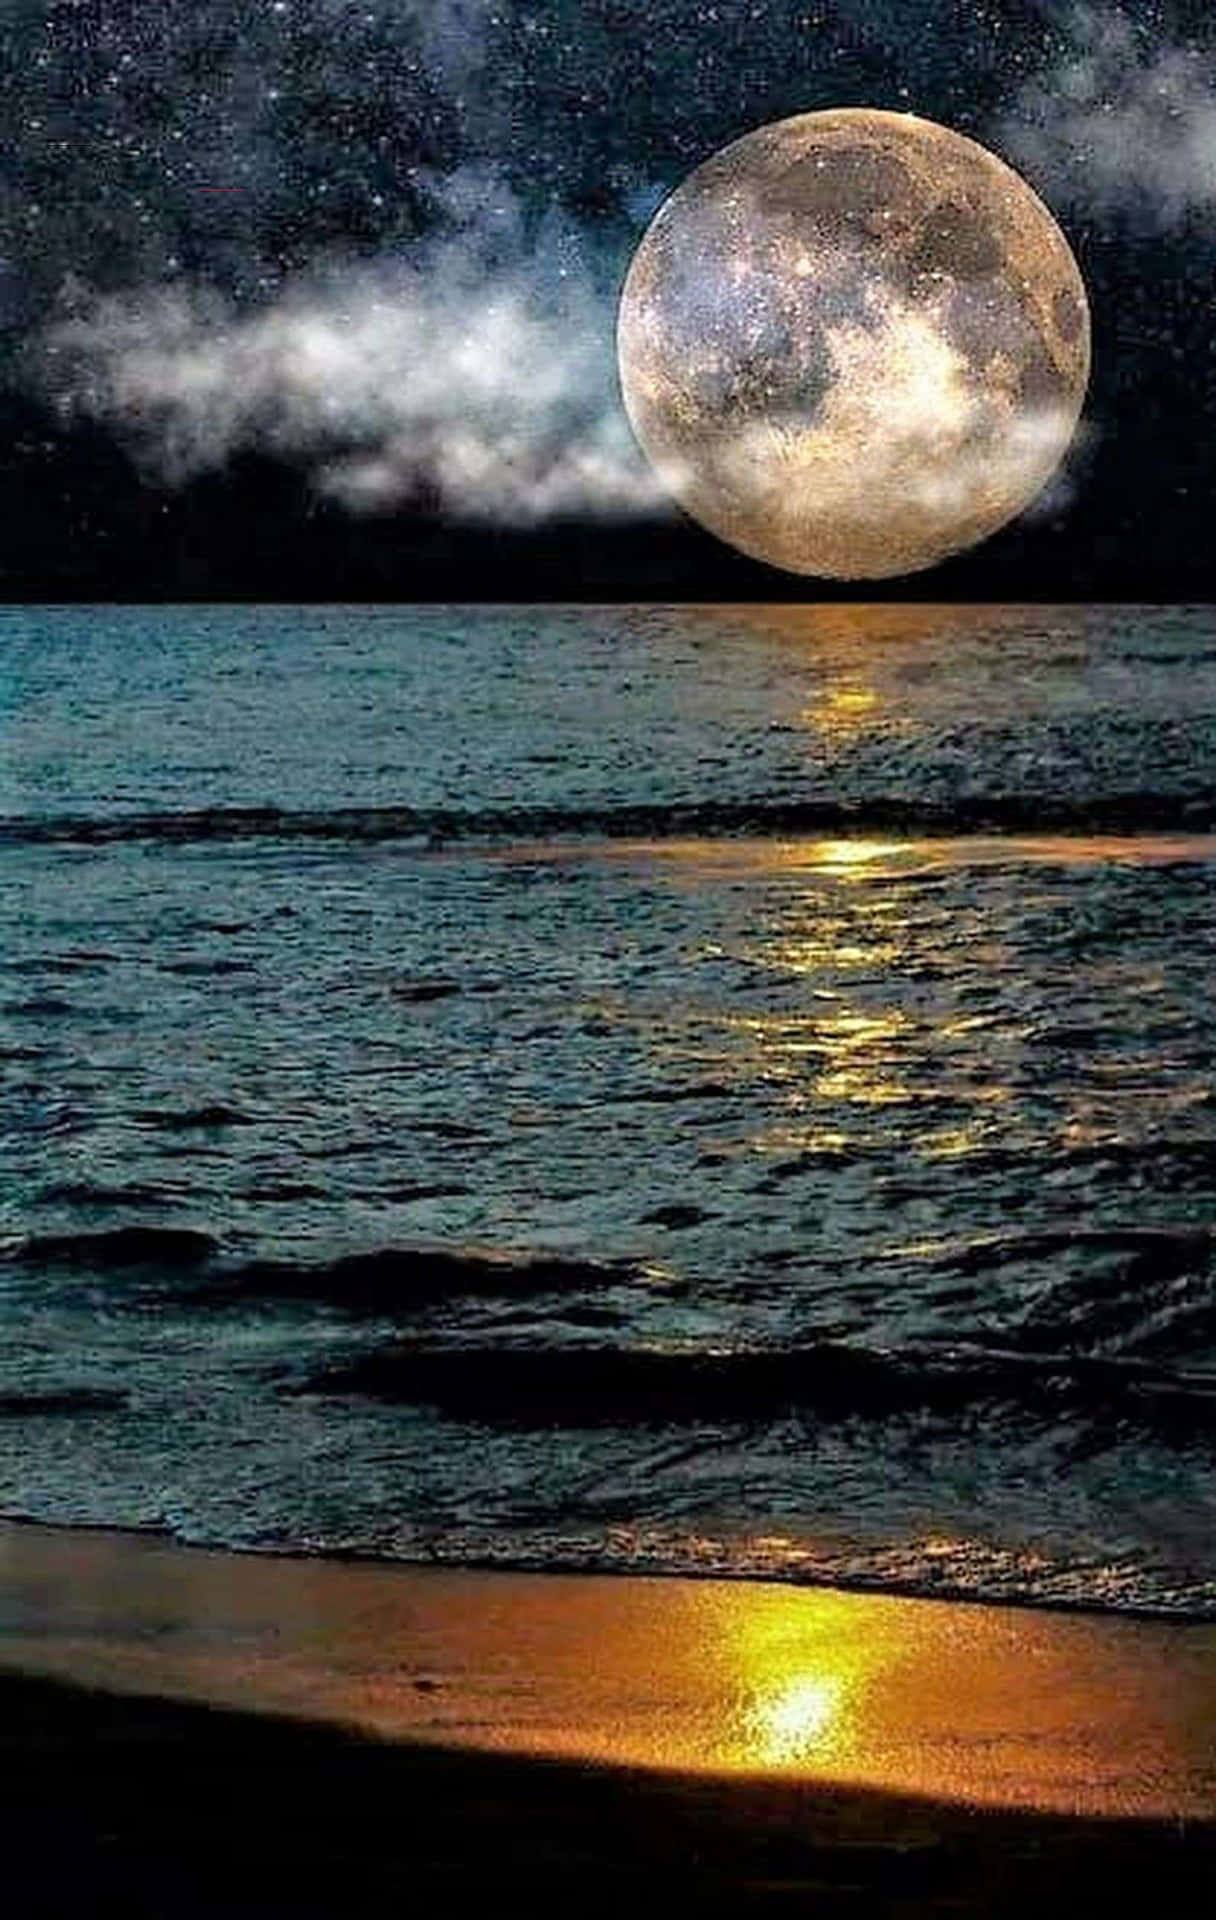 "Every night, the beautiful moon graces the night sky"